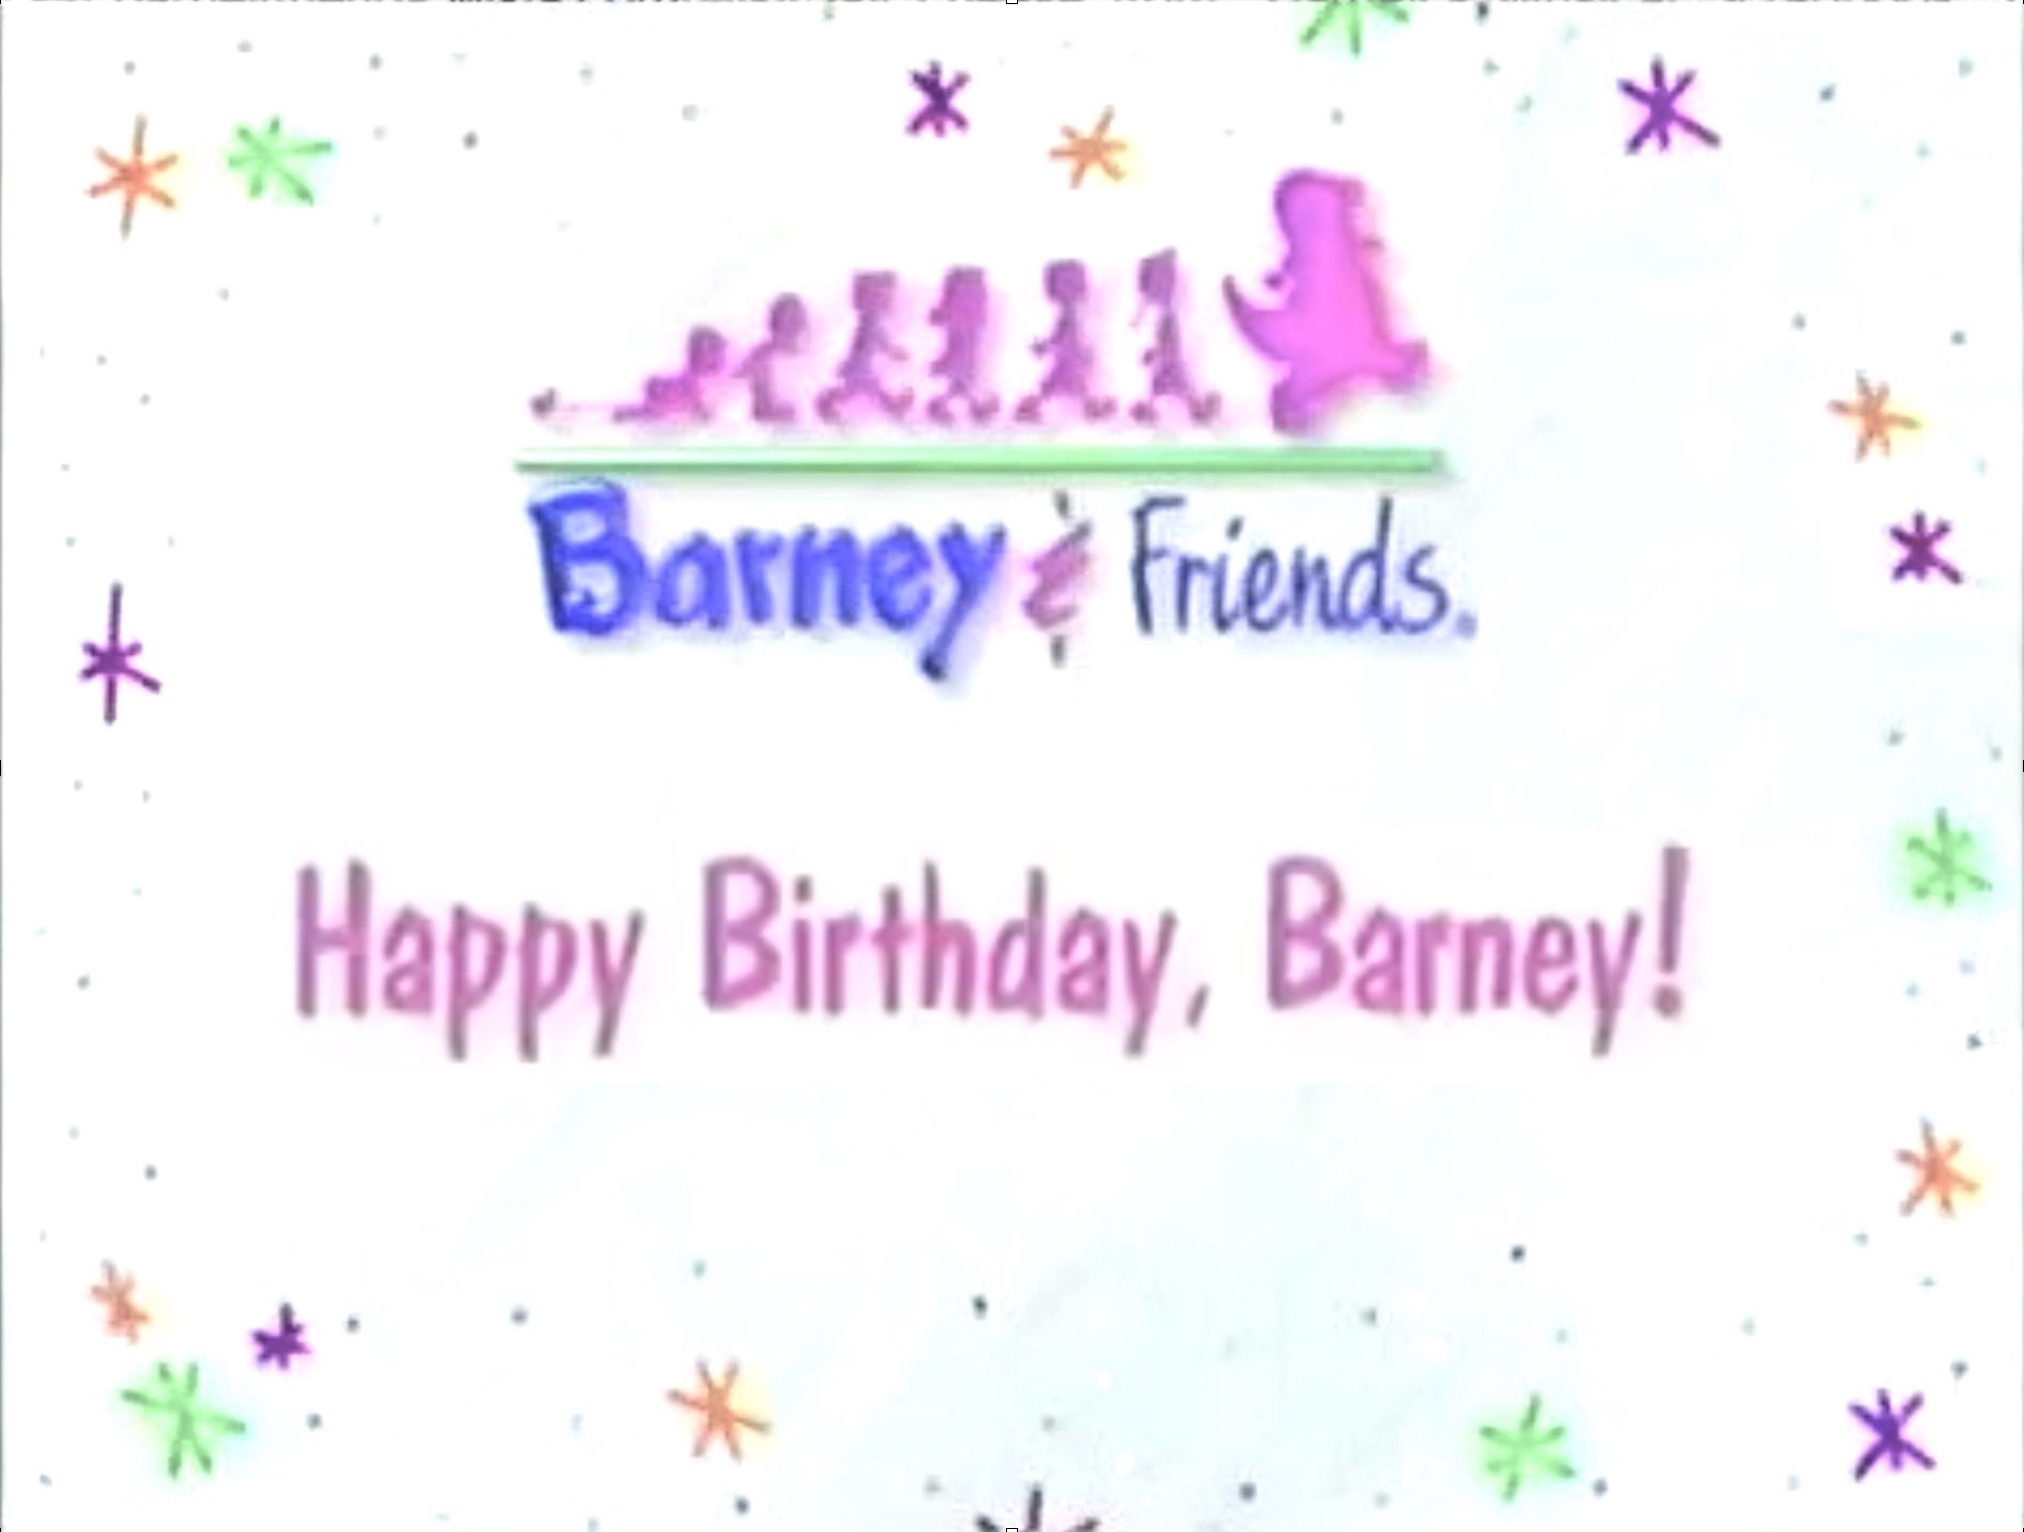 barney and friends happy birthday barney min